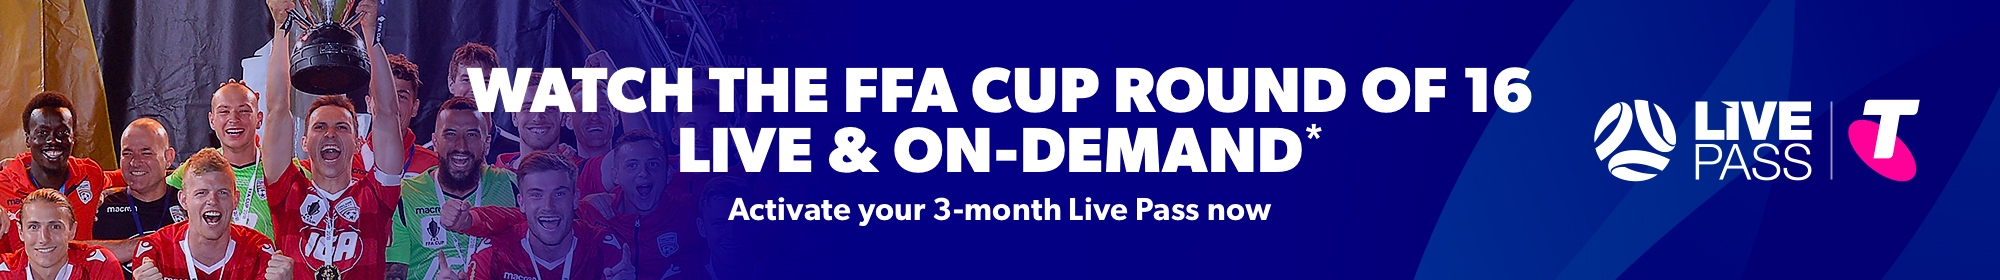 Watch-FFA-Cup-Telstra-Live-Pass